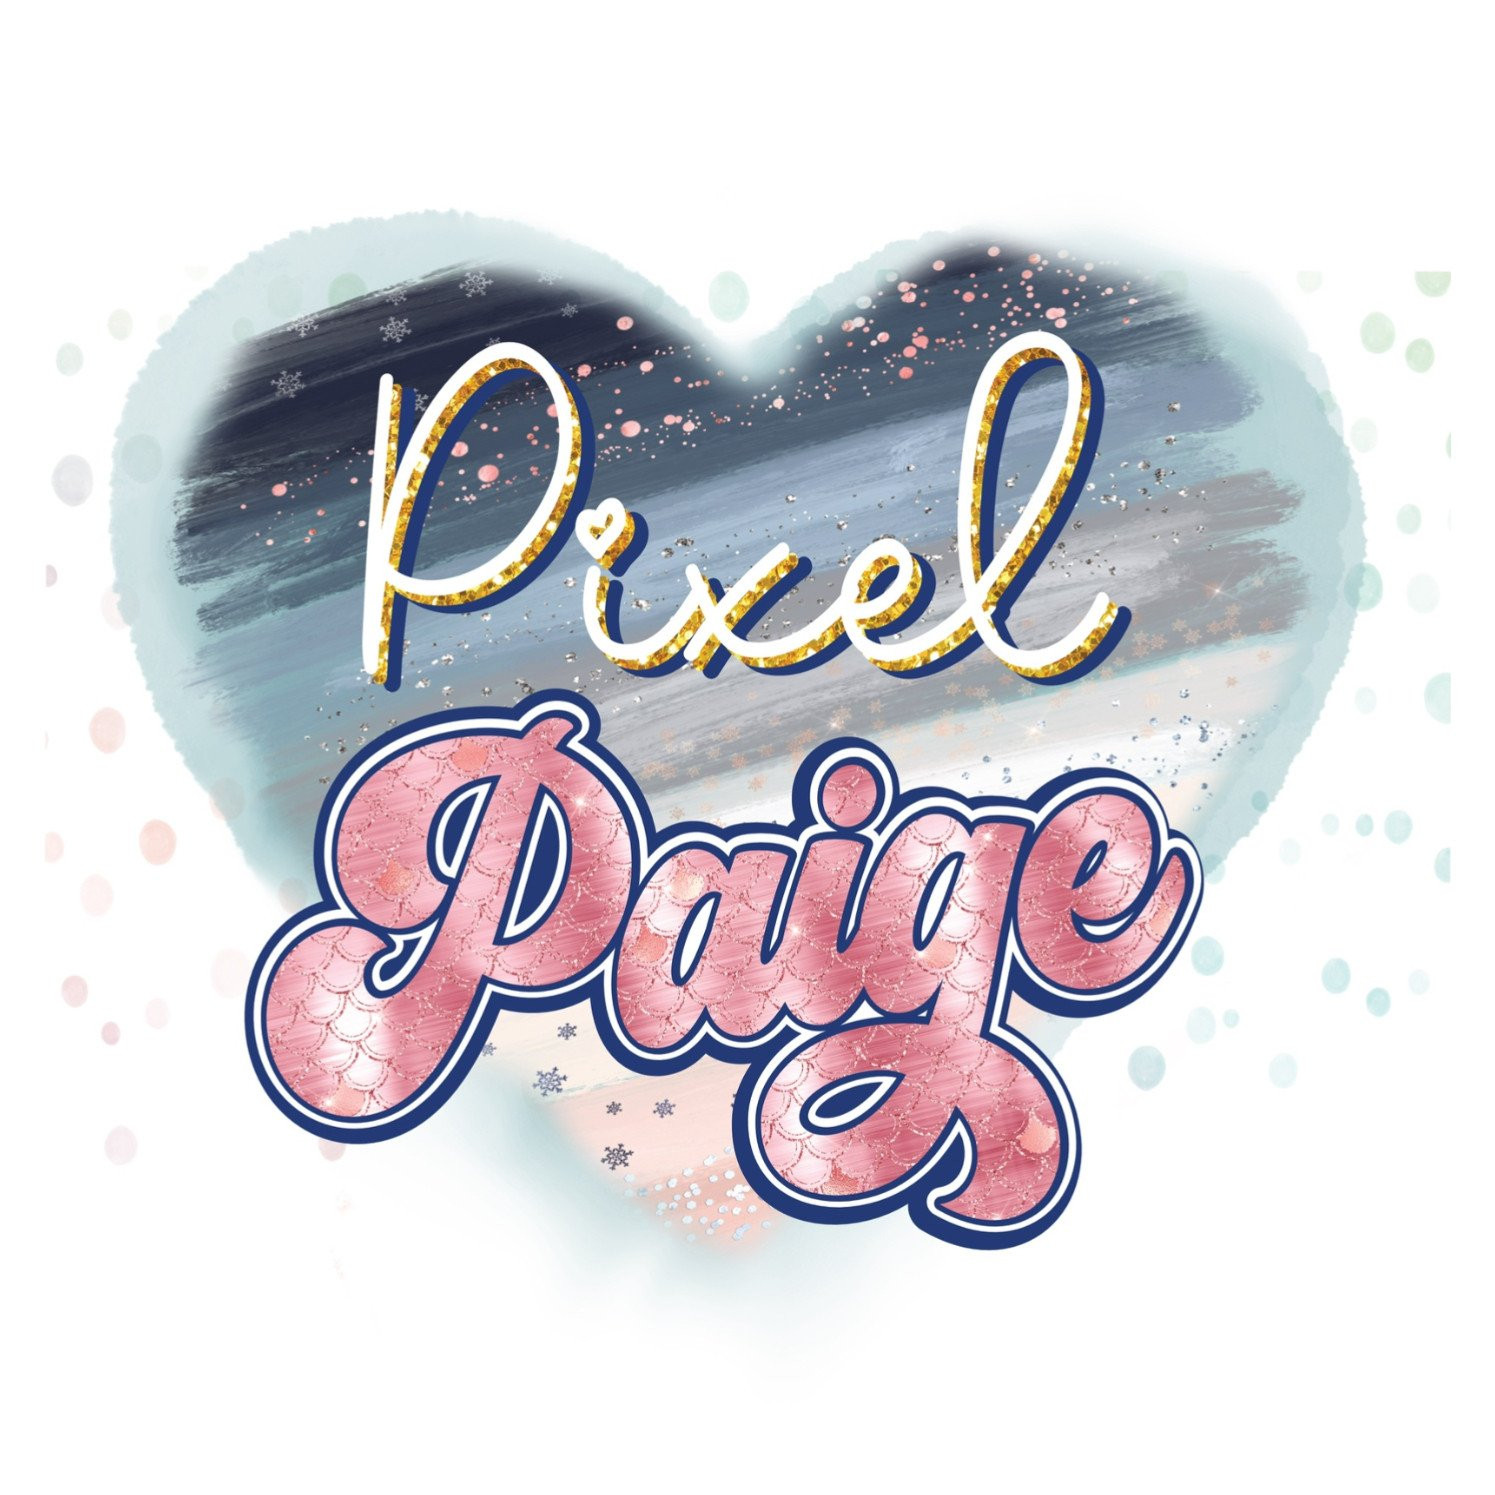 Pixel Paige Studio's profile picture